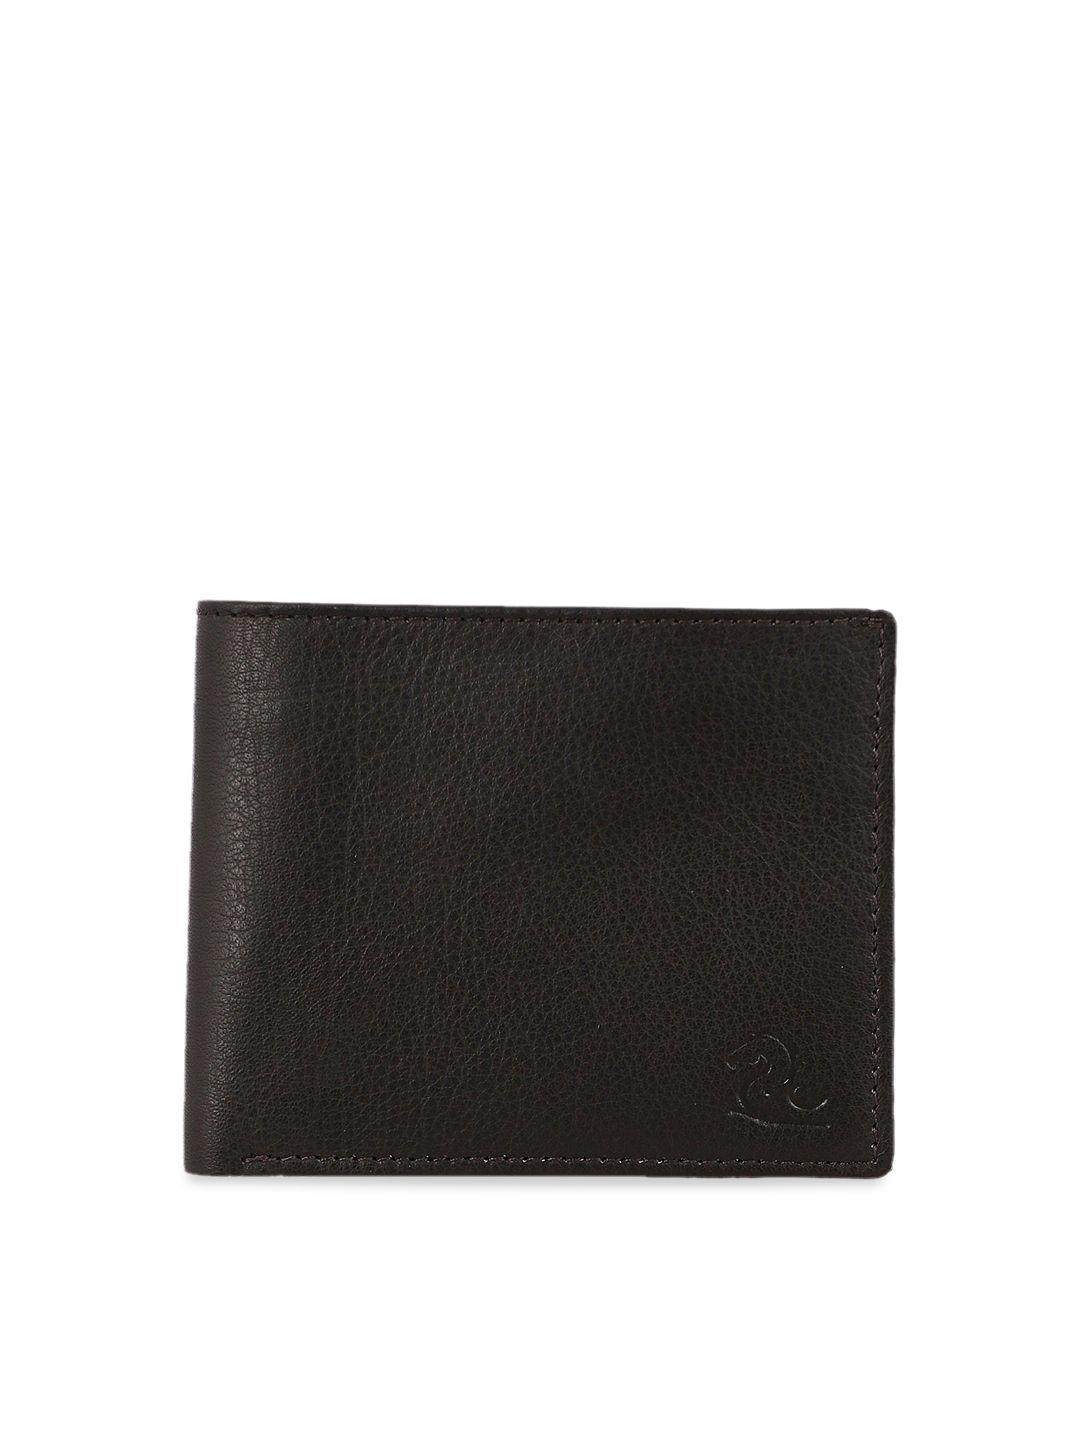 kara men brown solid genuine leather two fold wallet